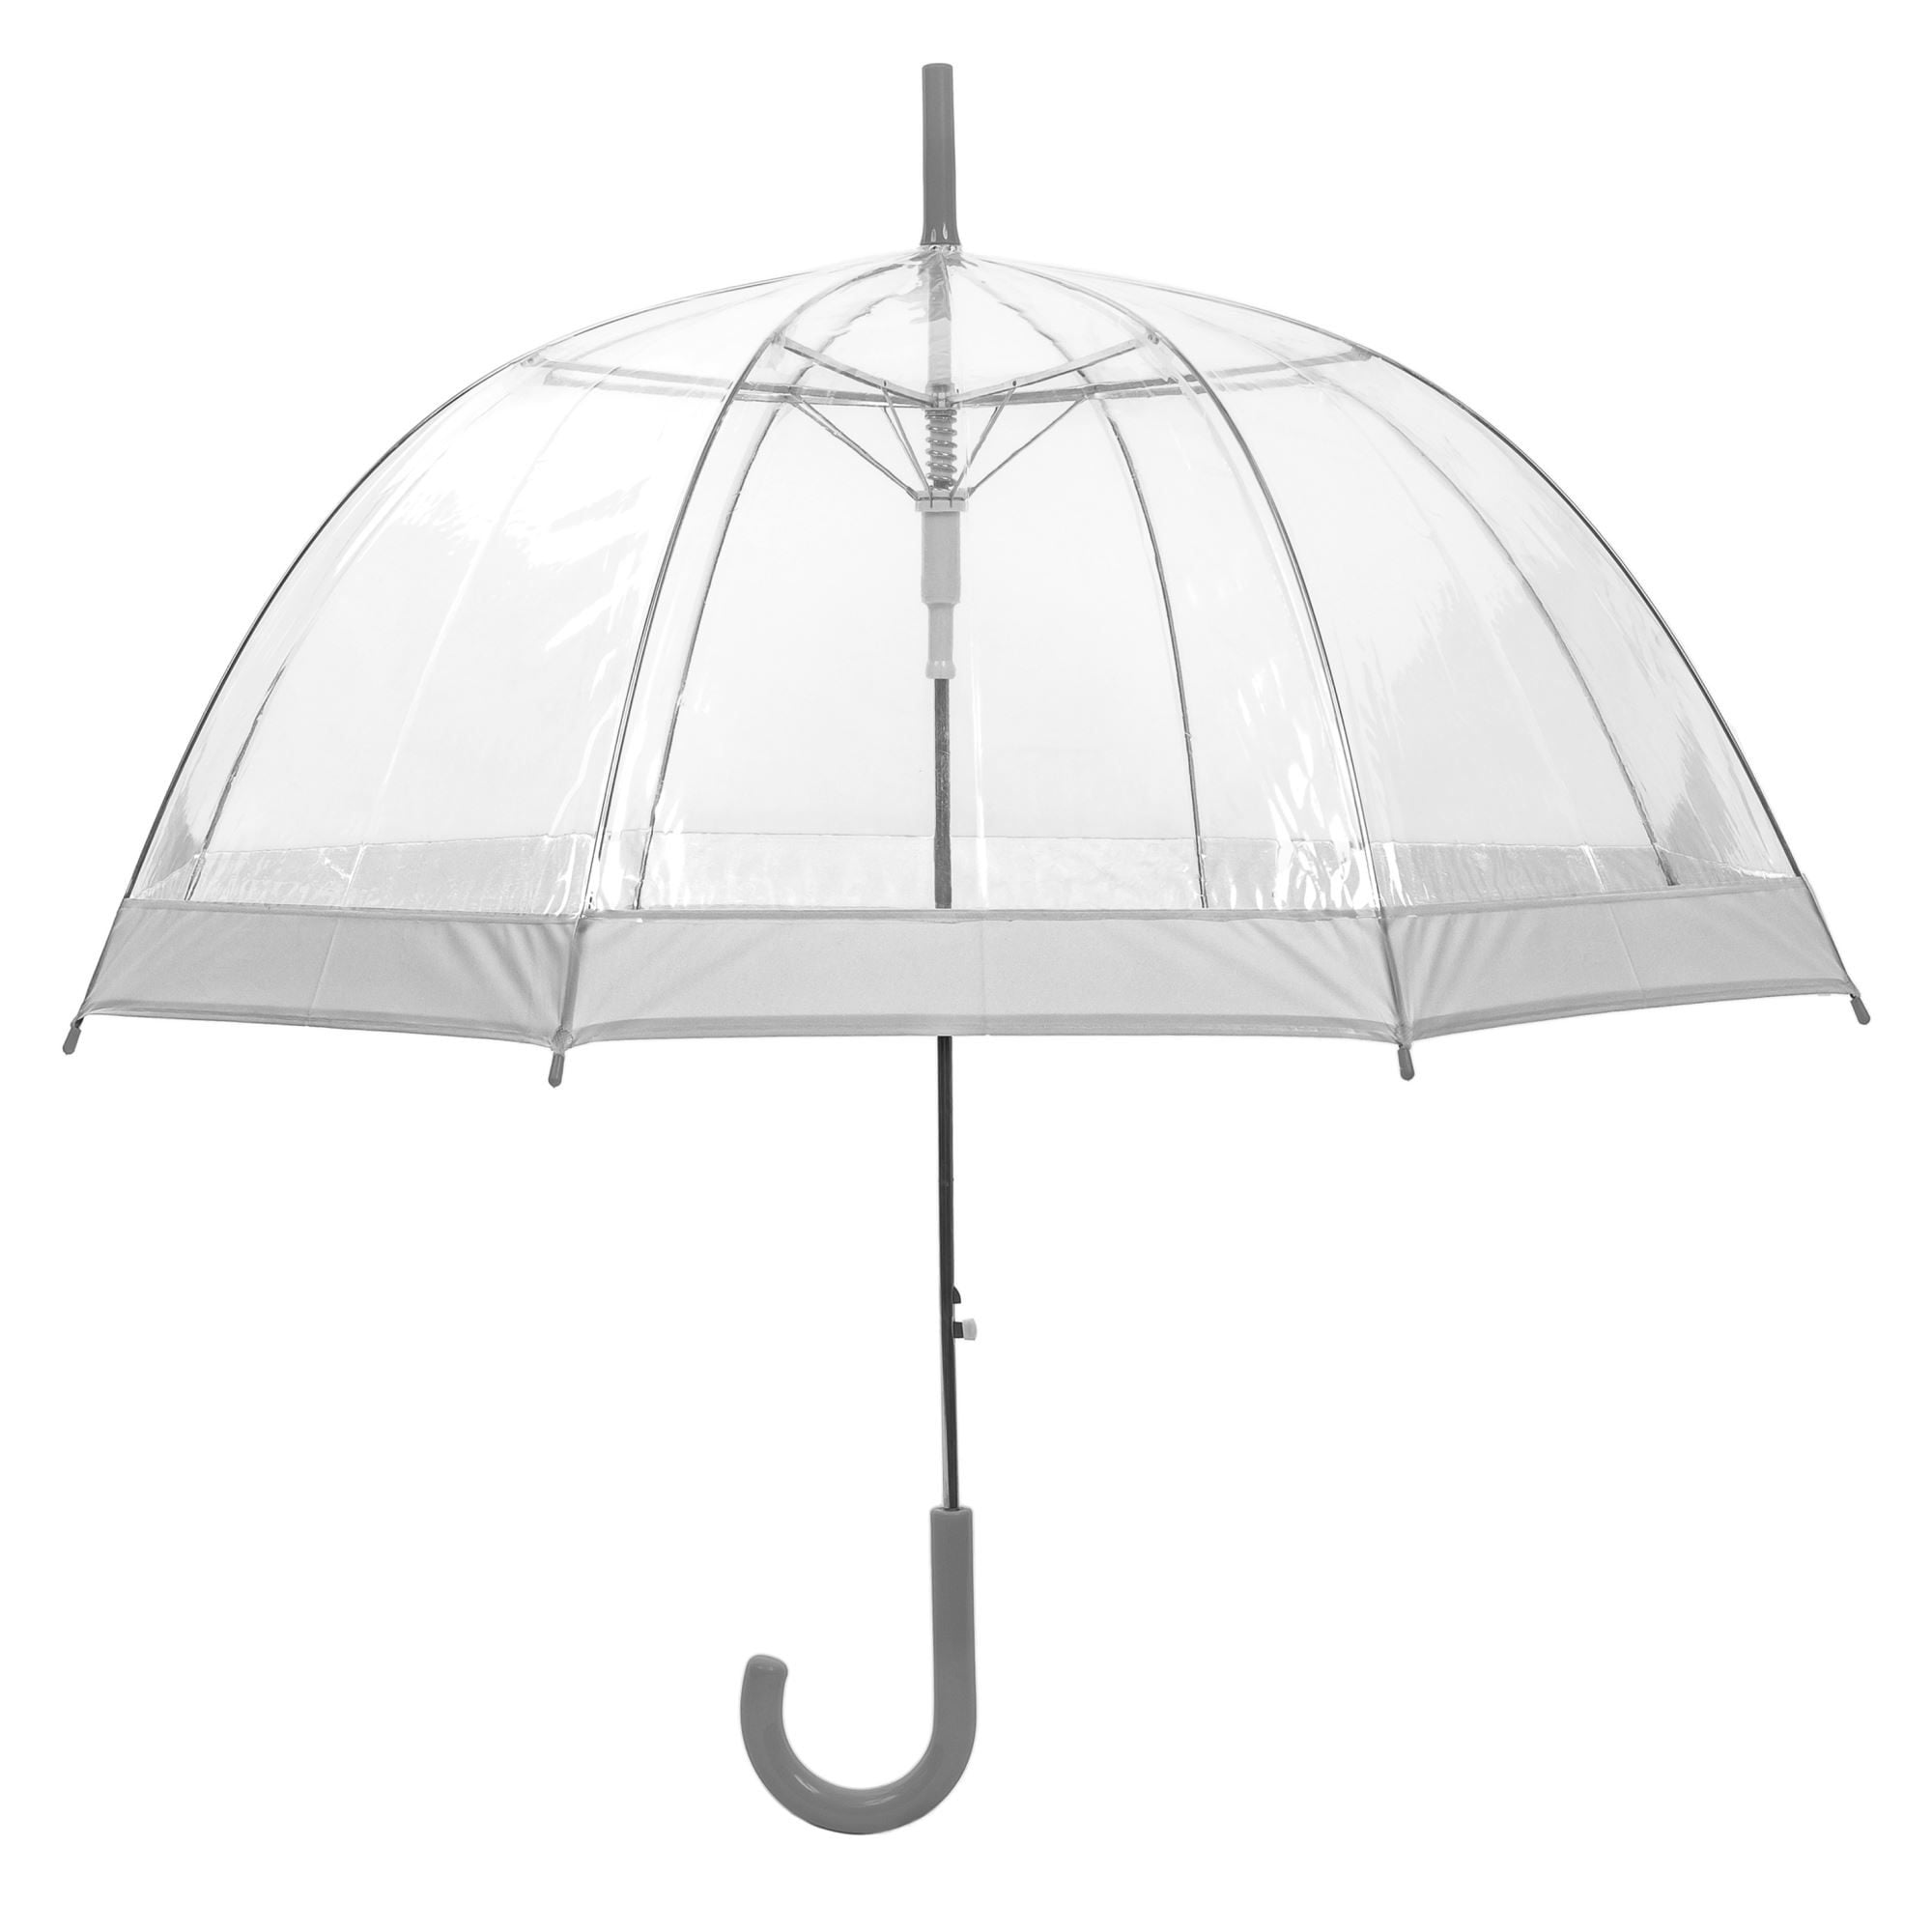 Black Border Fibreglass Frame Clear Dome umbrella